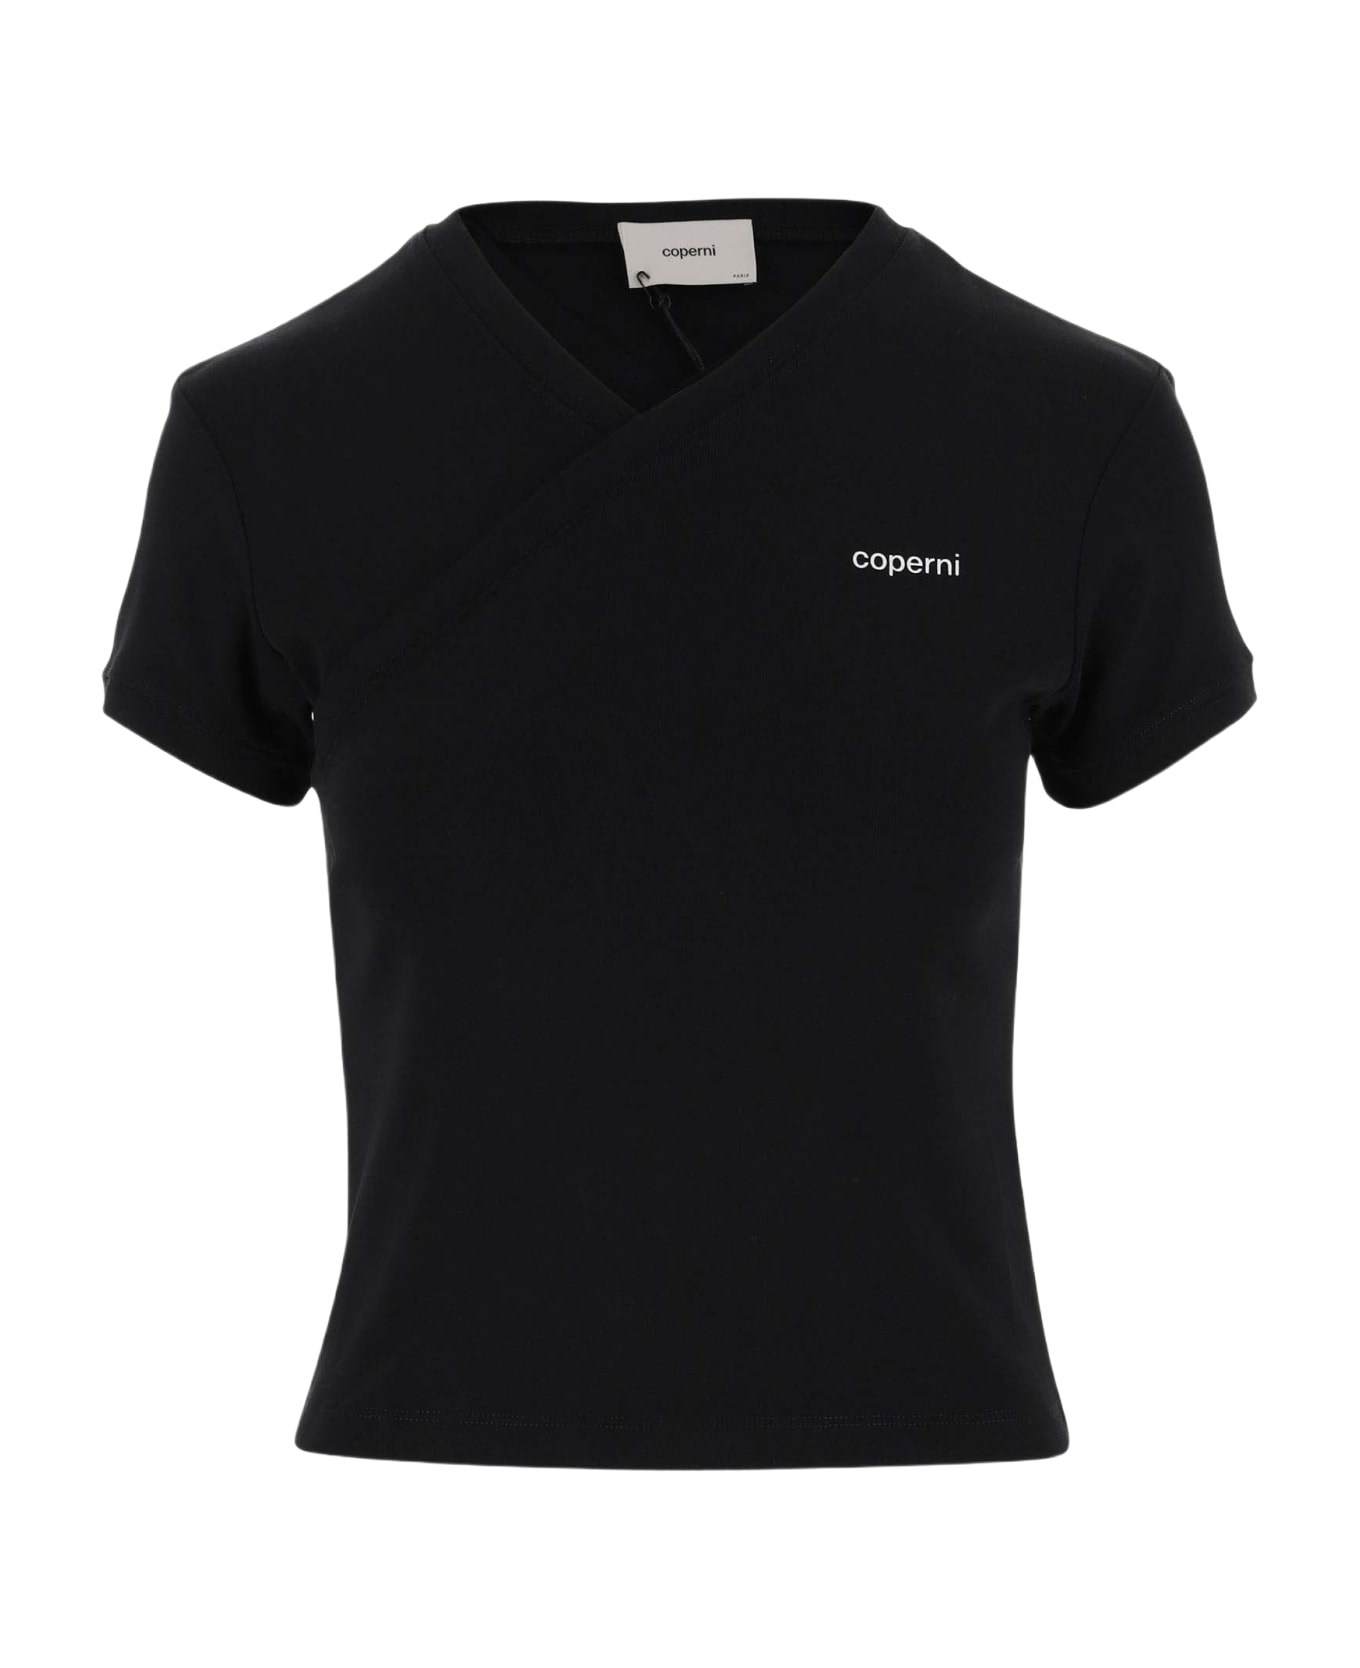 Coperni T-shirt - Black Tシャツ